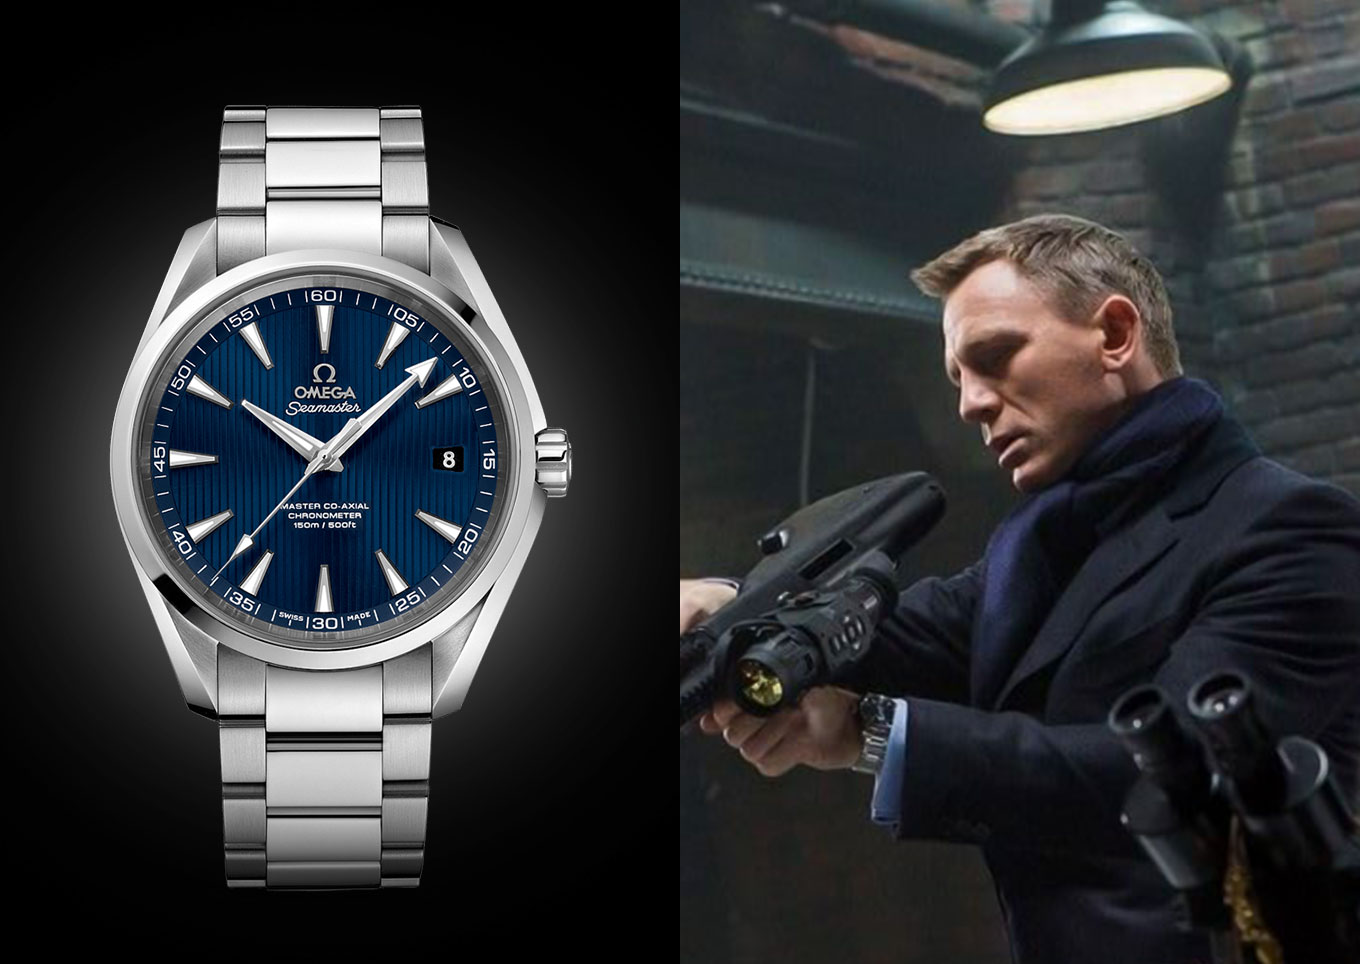 Omega watches worn by Daniel Craig in James Bond